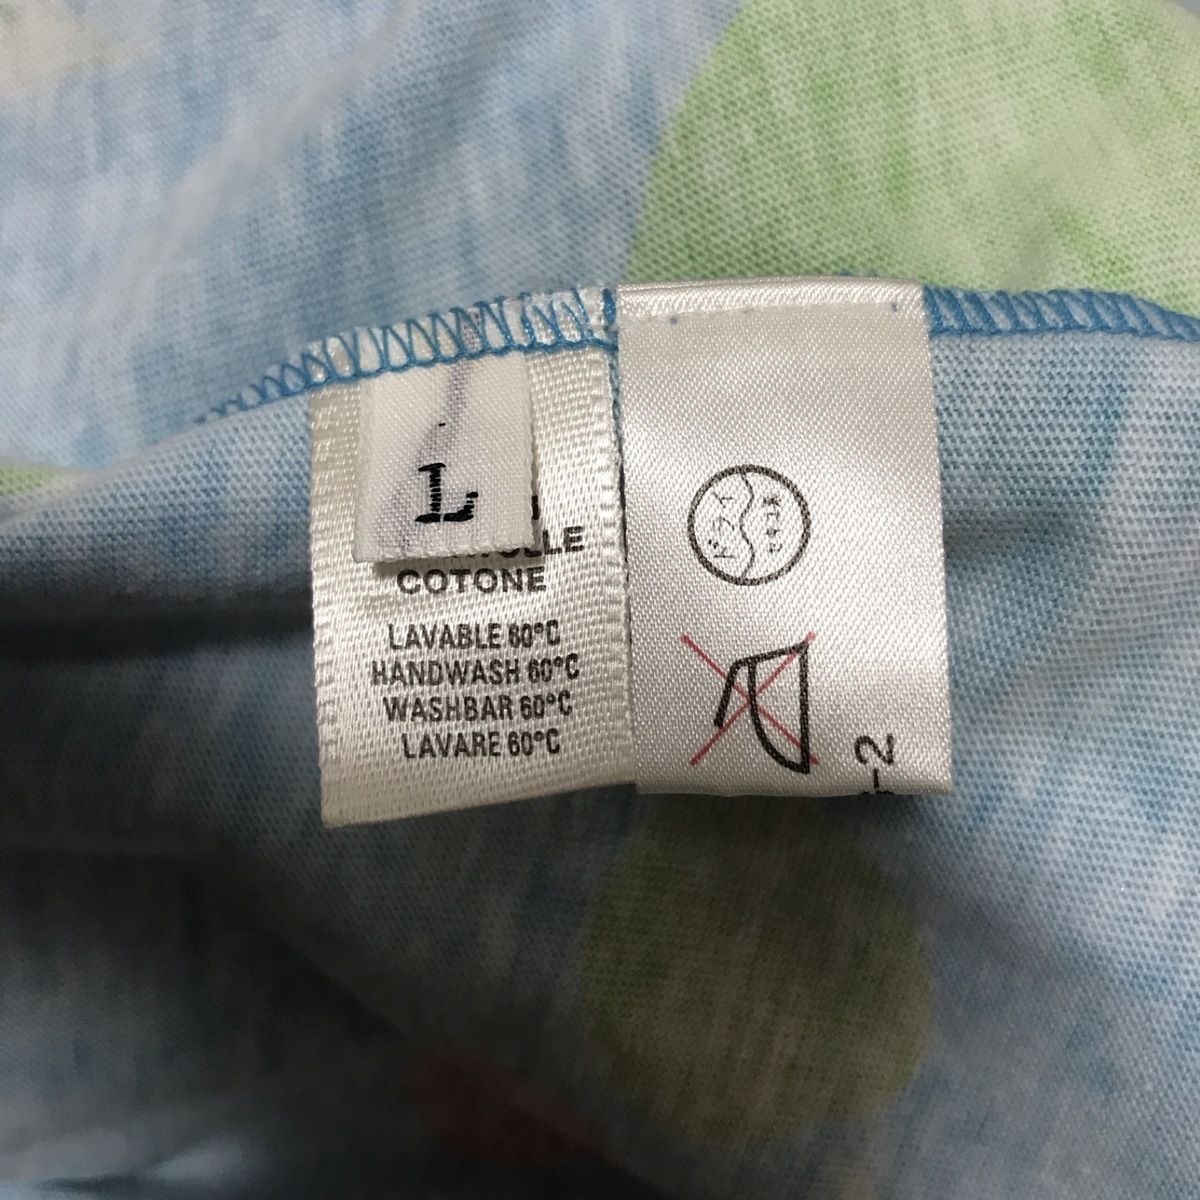 LEONARD(レオナール) 半袖Tシャツ サイズL レディース - ライトブルー